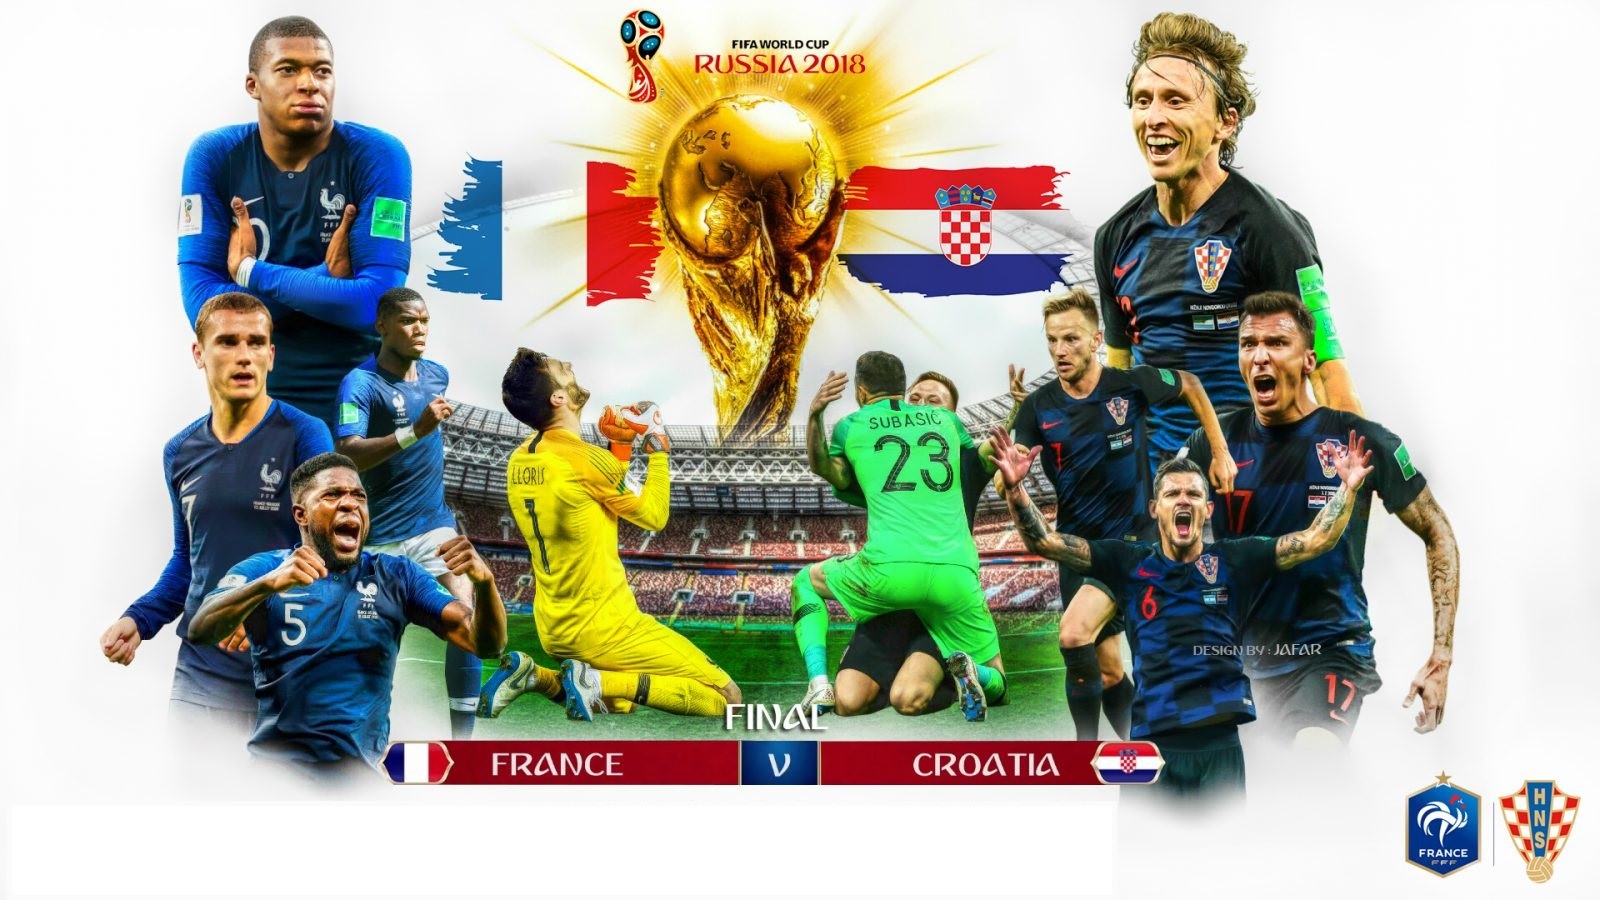 france_croatia_final_world_cup_2018-1600x900.jpg